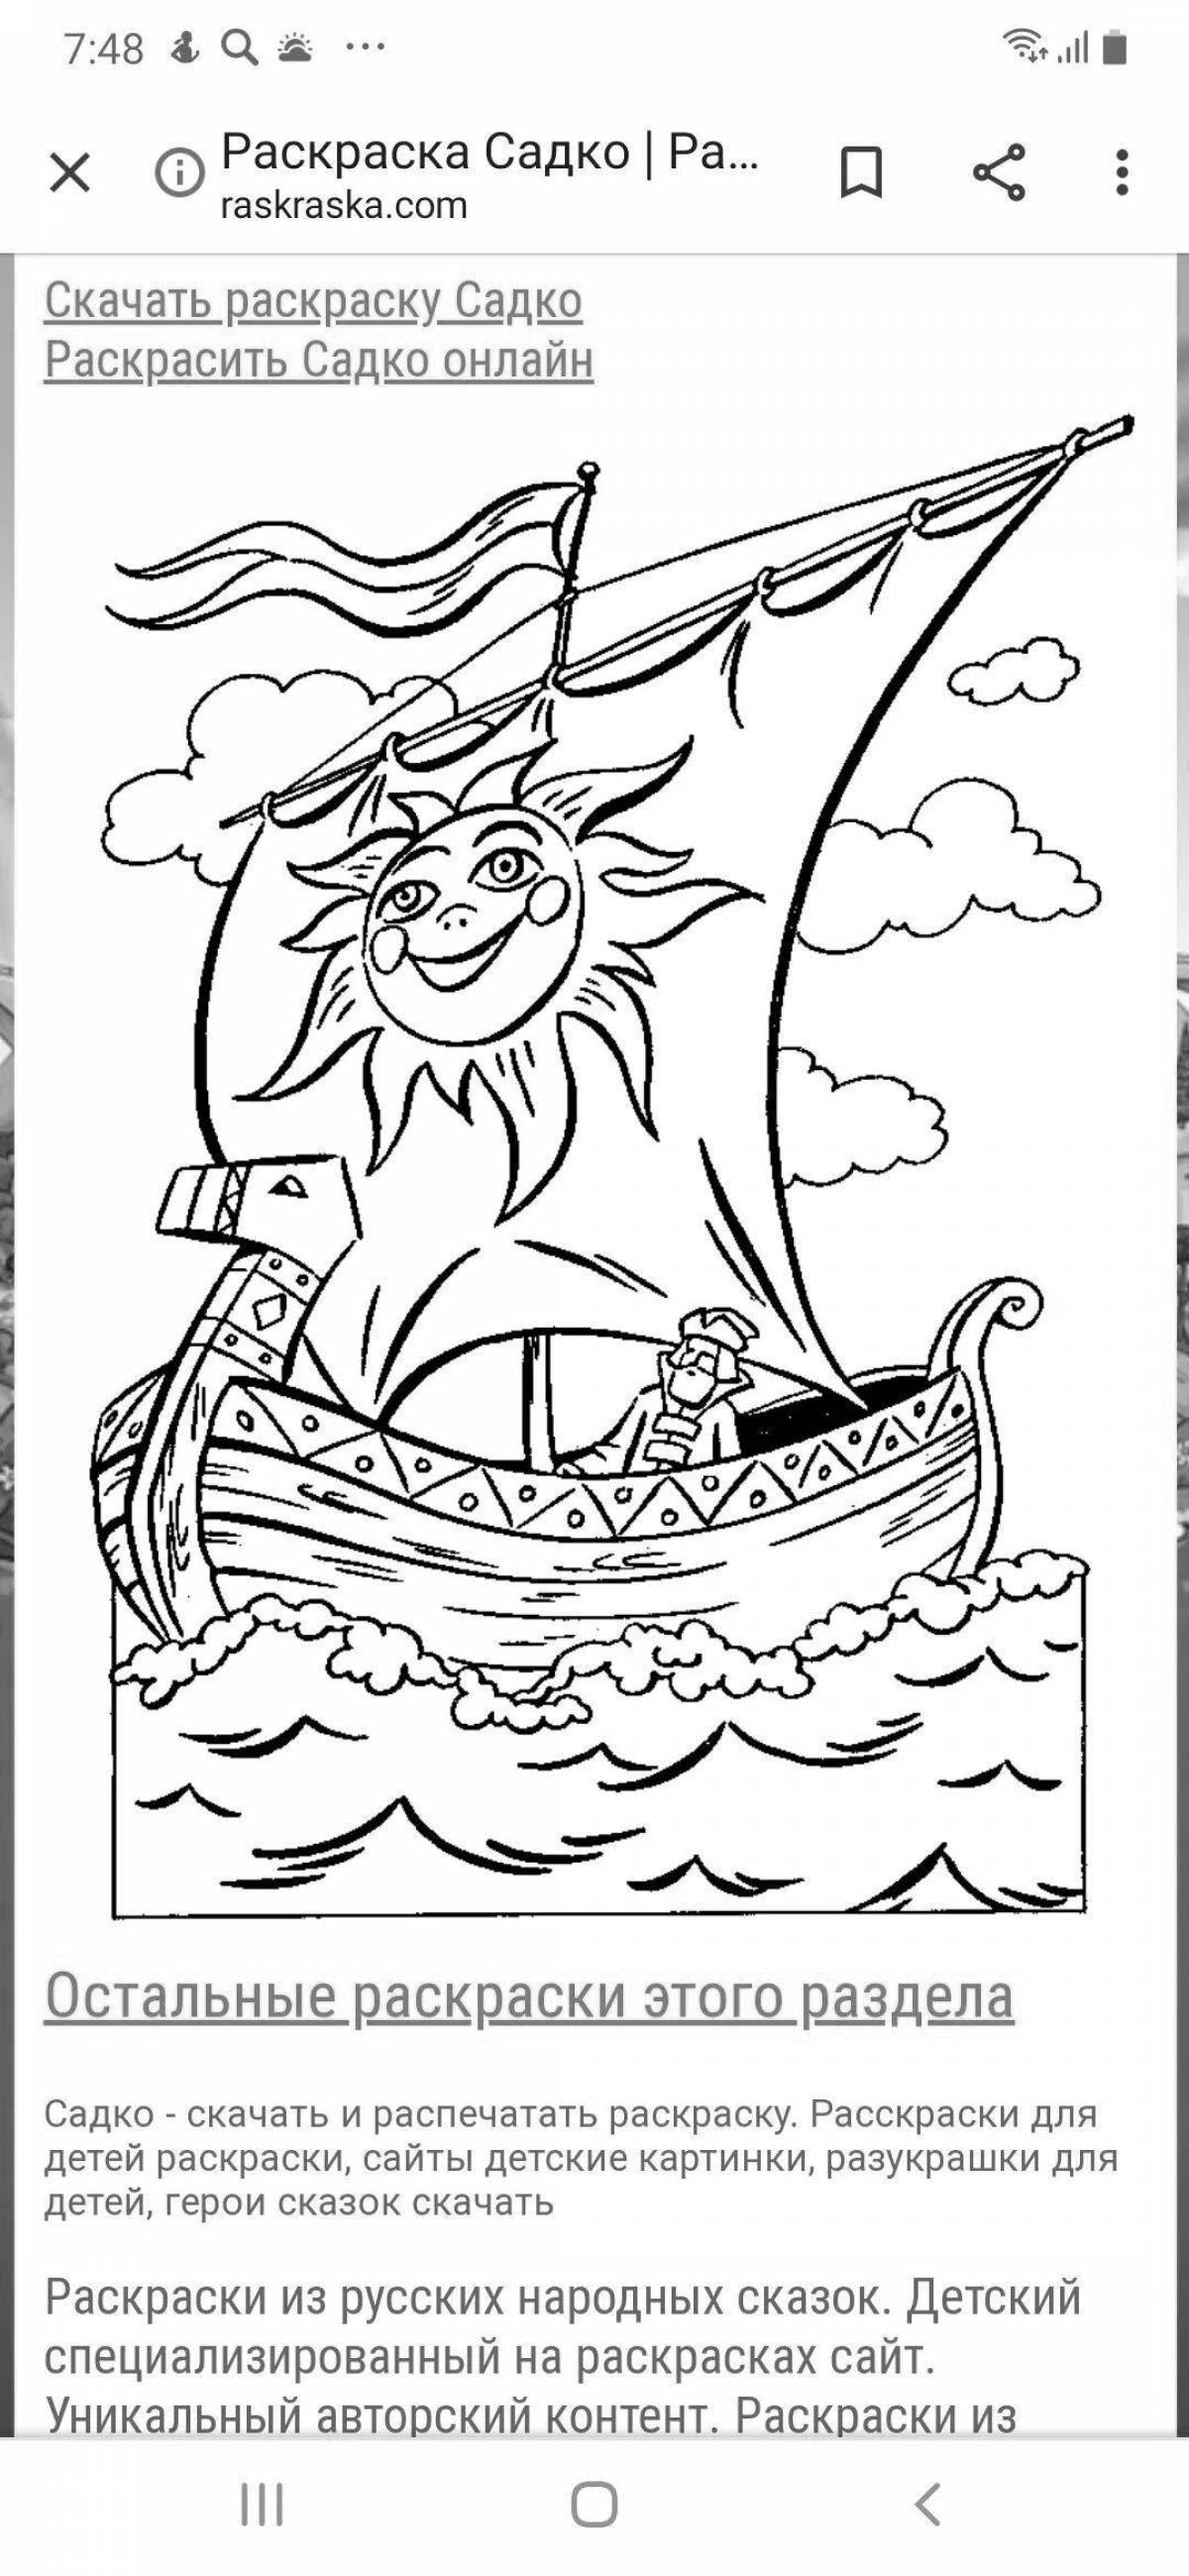 Sadko and the sea king coloring page